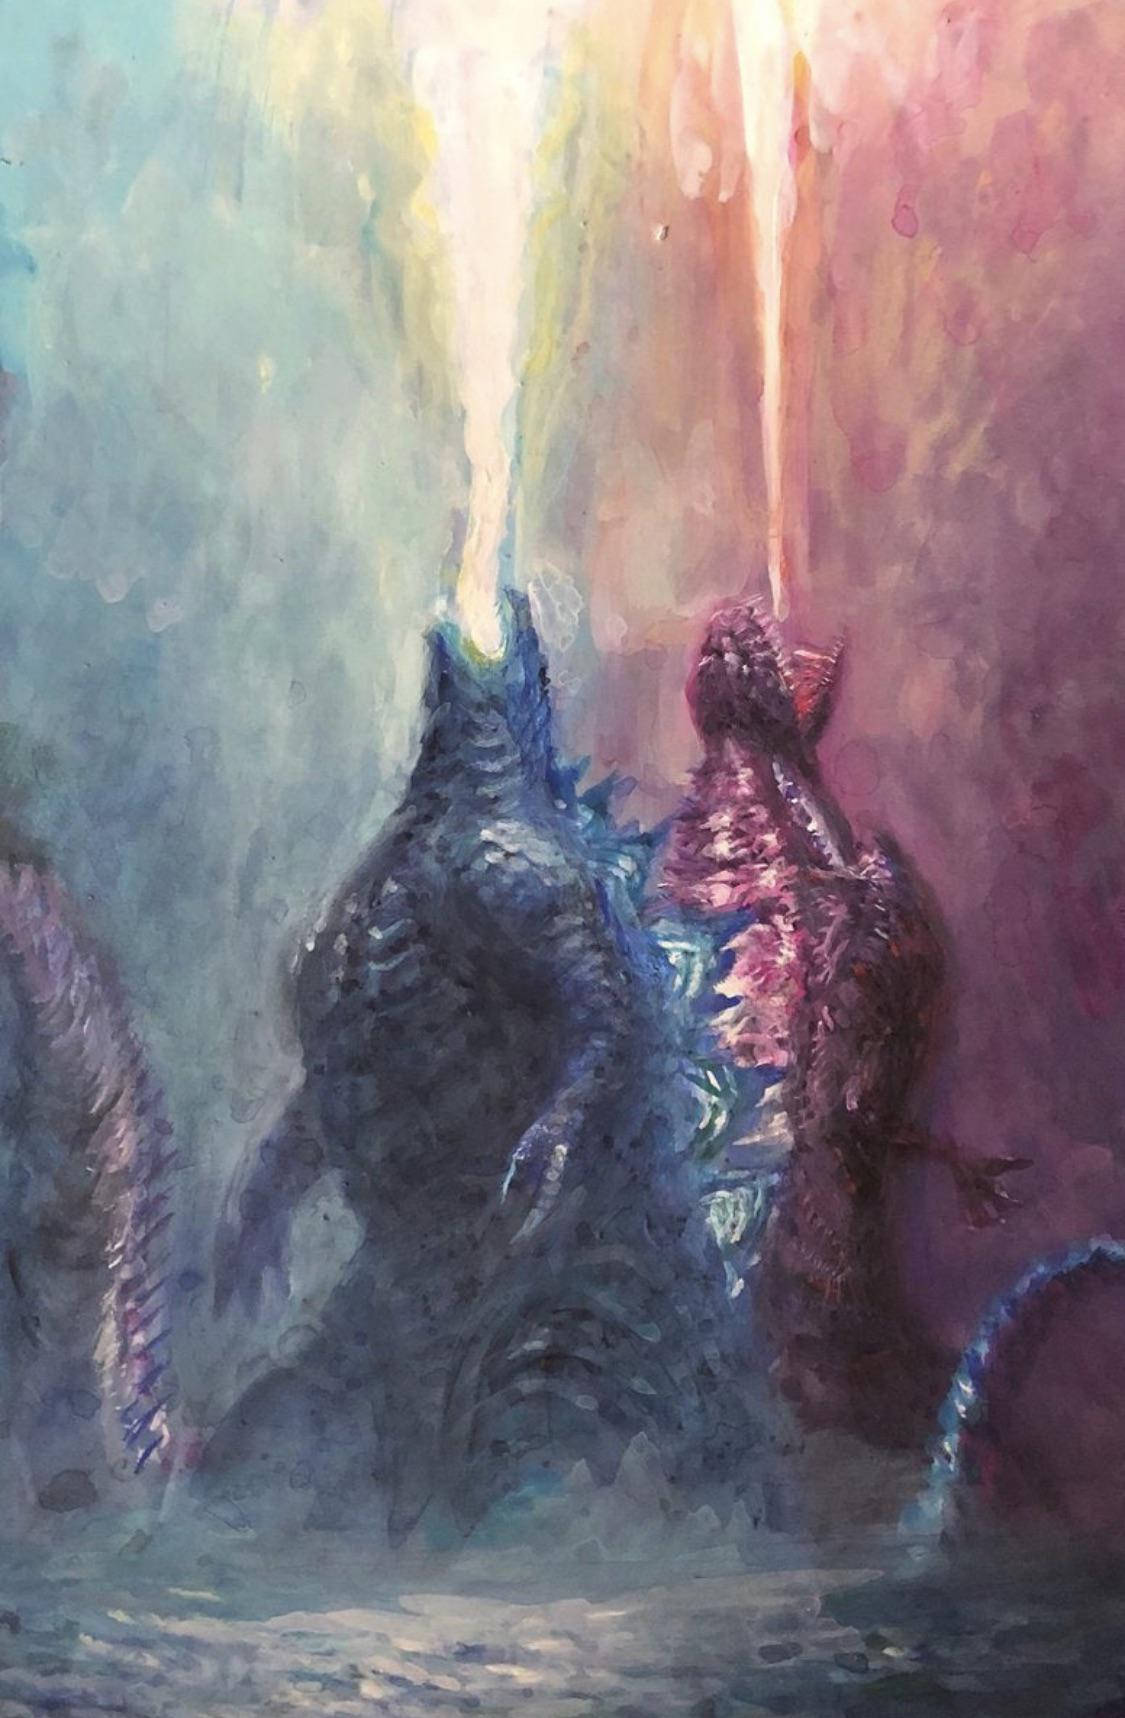 Fire Breathing Godzilla Wallpaper